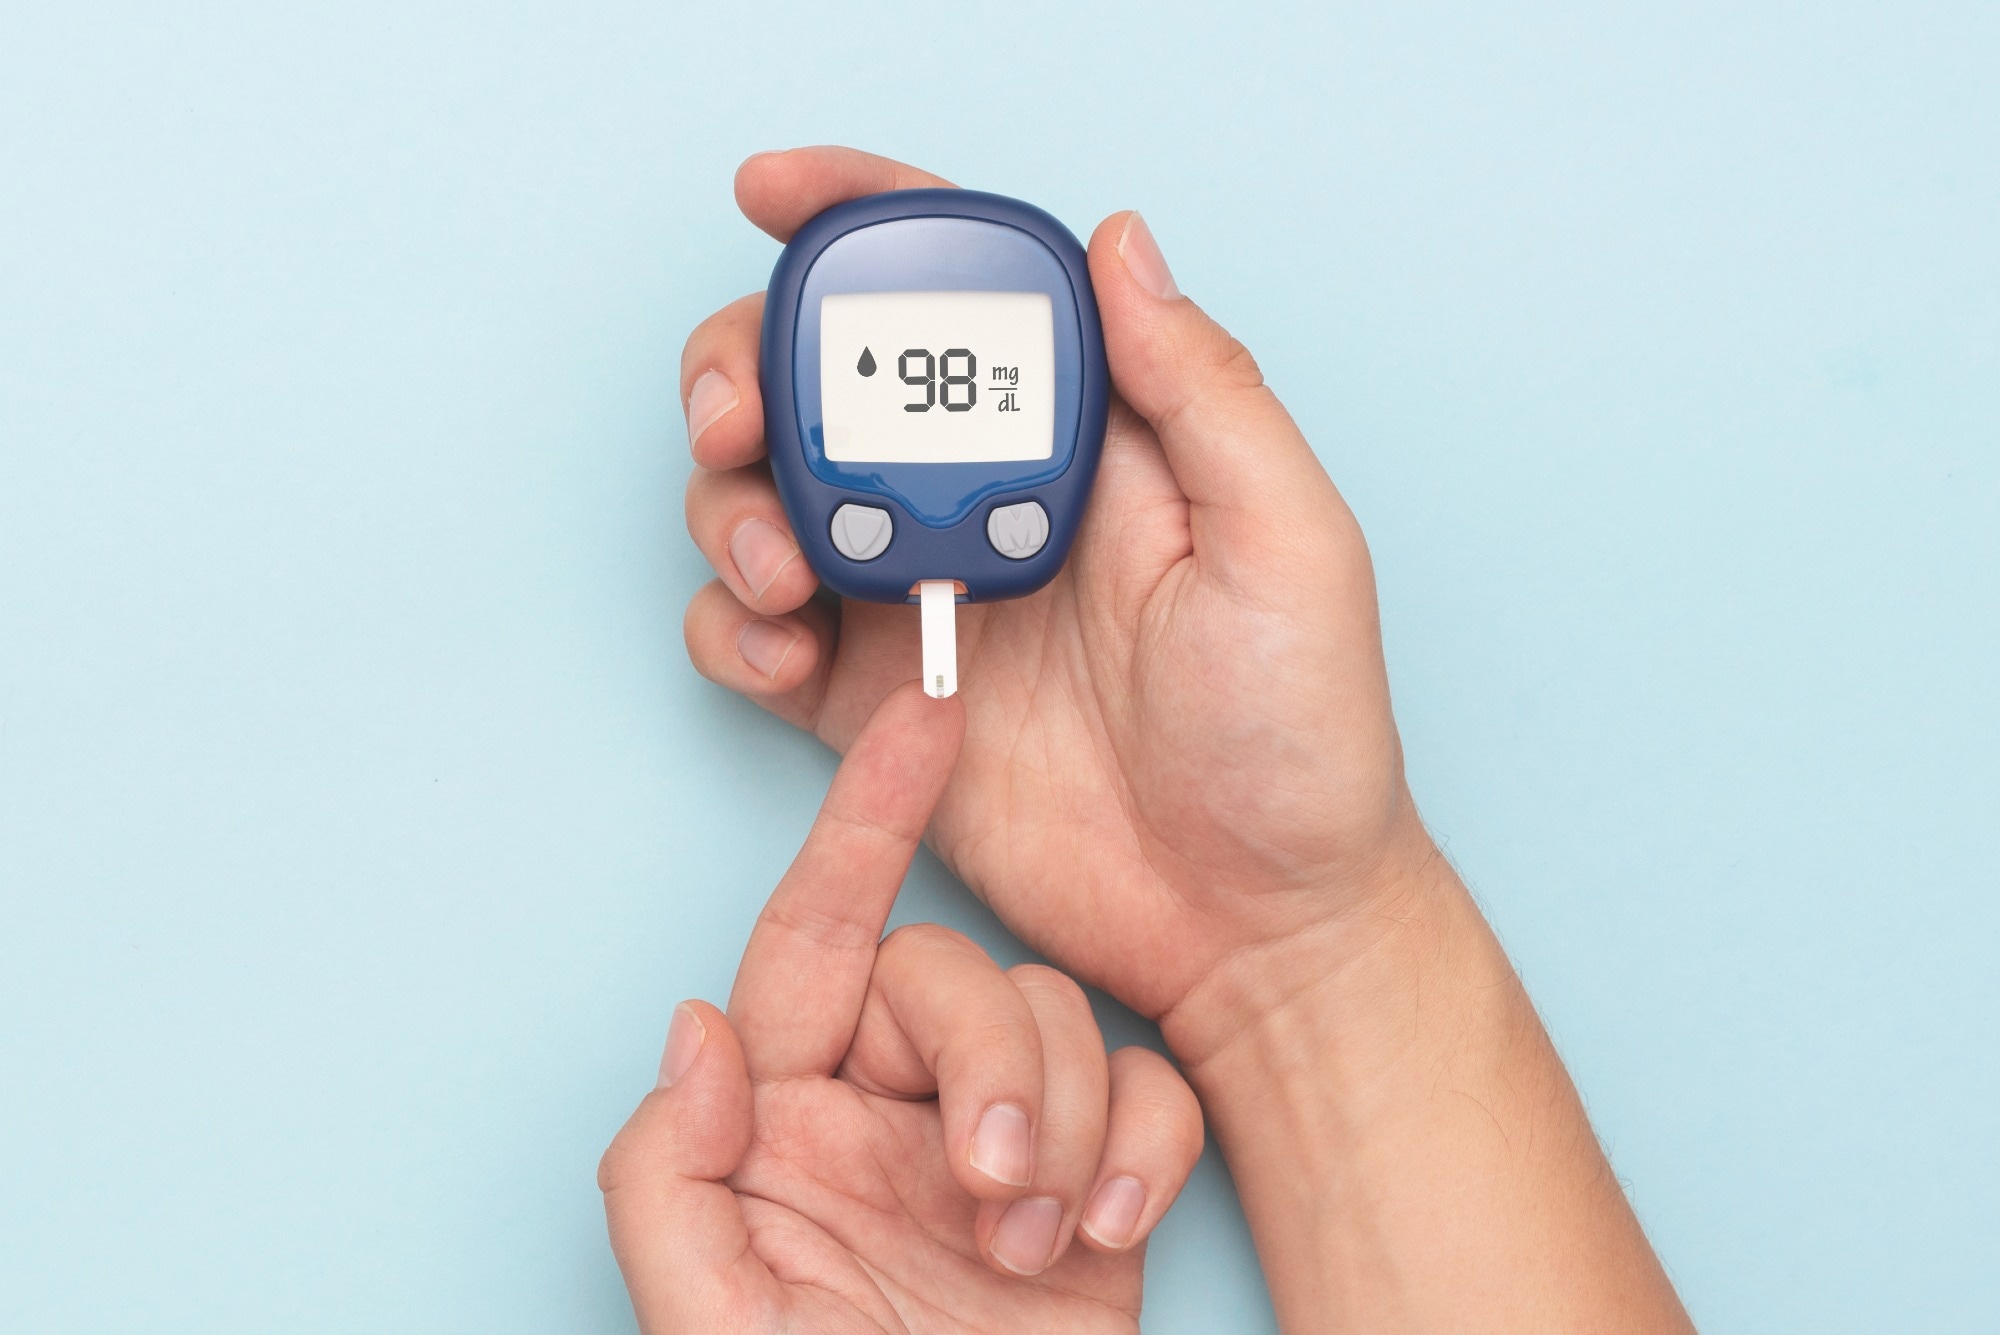 UK’s national health service diabetes program proves effective in managing prediabetes, major study finds